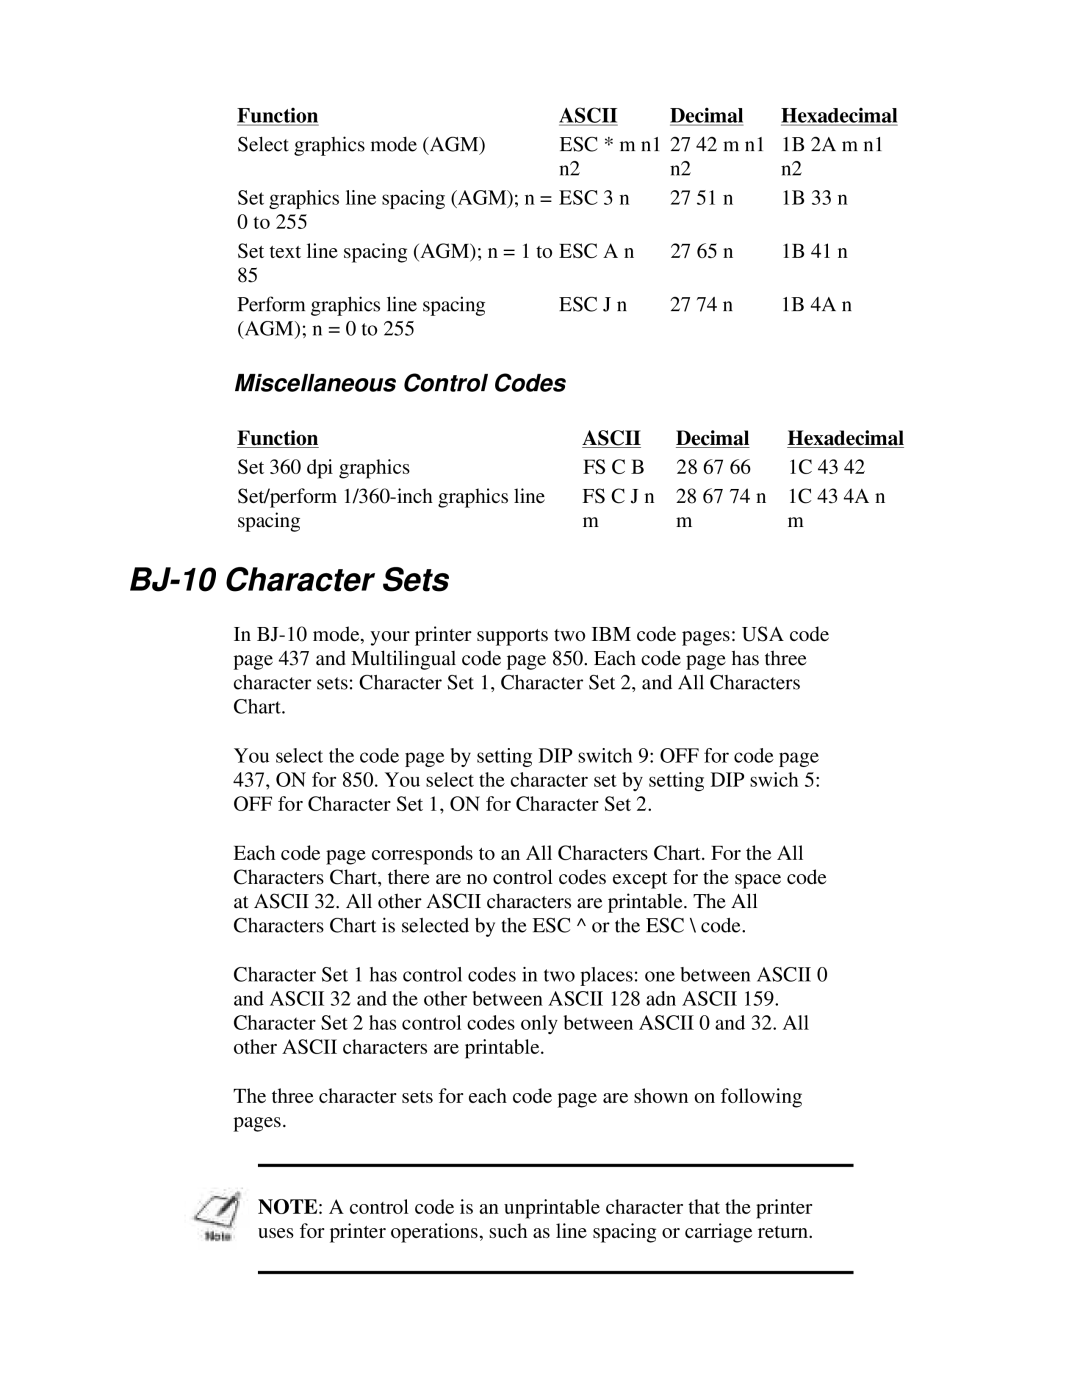 Canon BJ-230 user manual BJ-10 Character Sets, Miscellaneous Control Codes, Function, Ascii, Decimal, Hexadecimal 